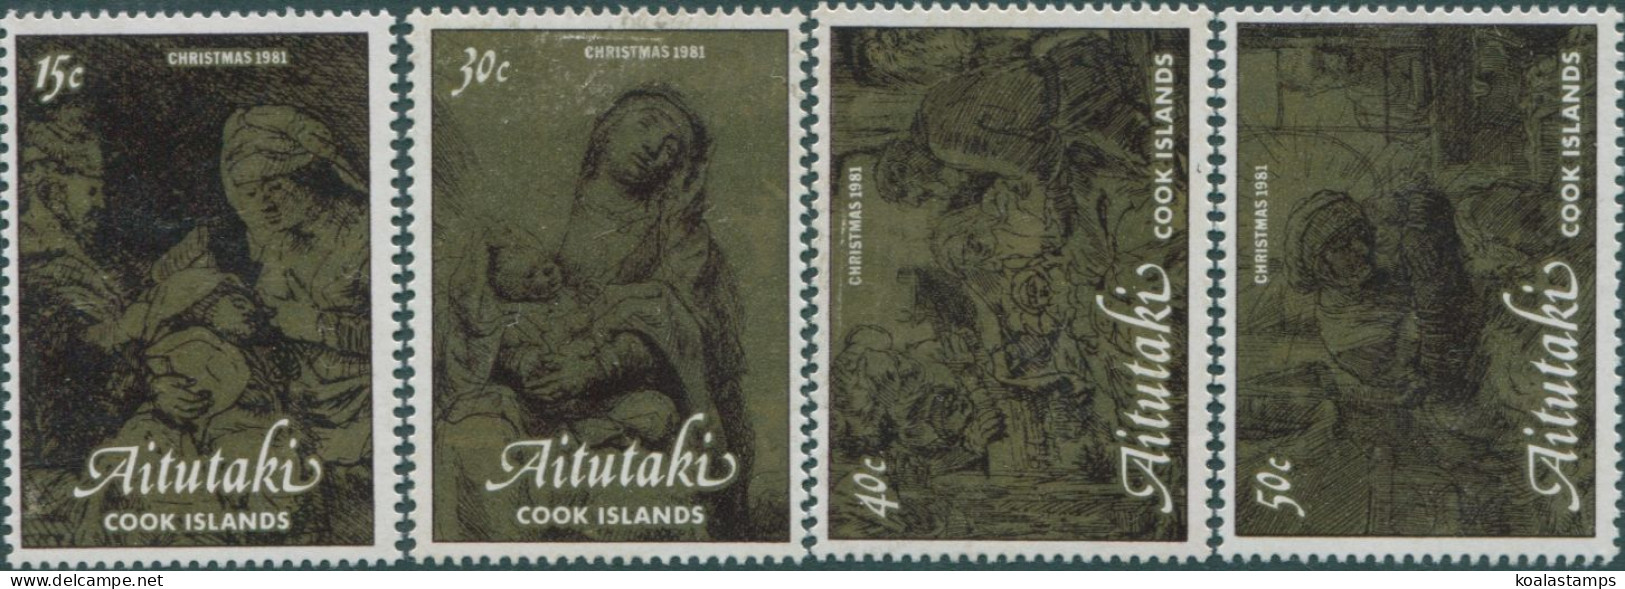 Aitutaki 1981 SG406-409 Christmas Set MNH - Cook